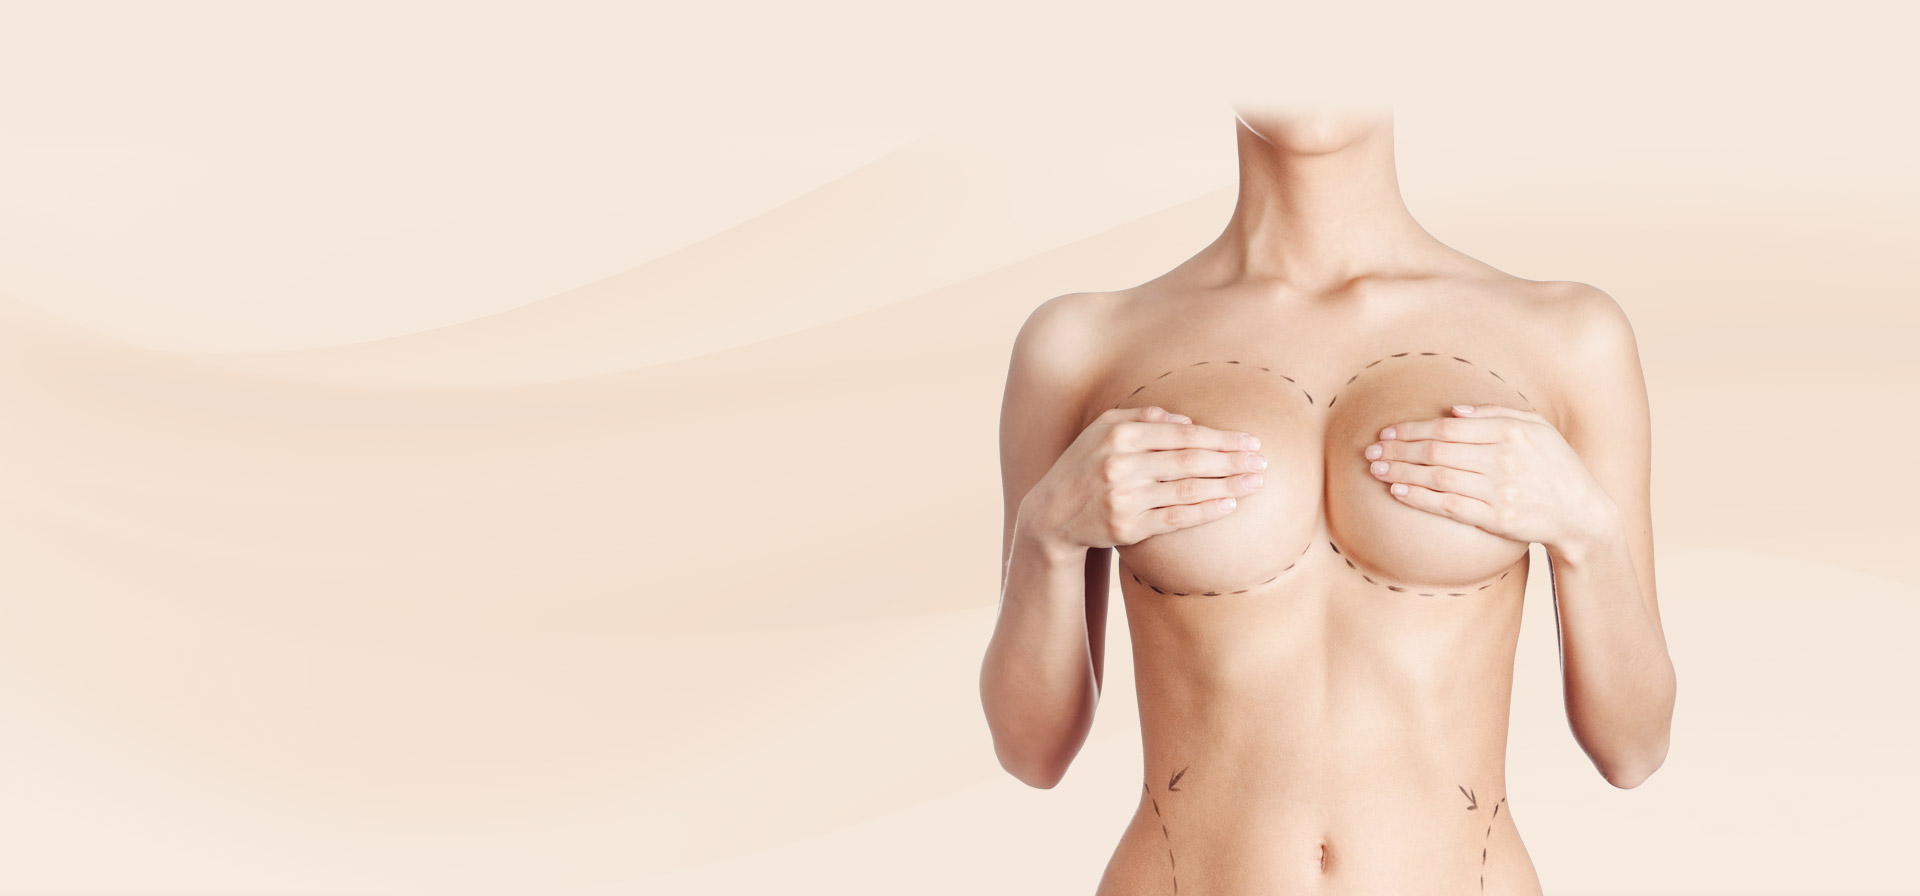 Plastic breast operation